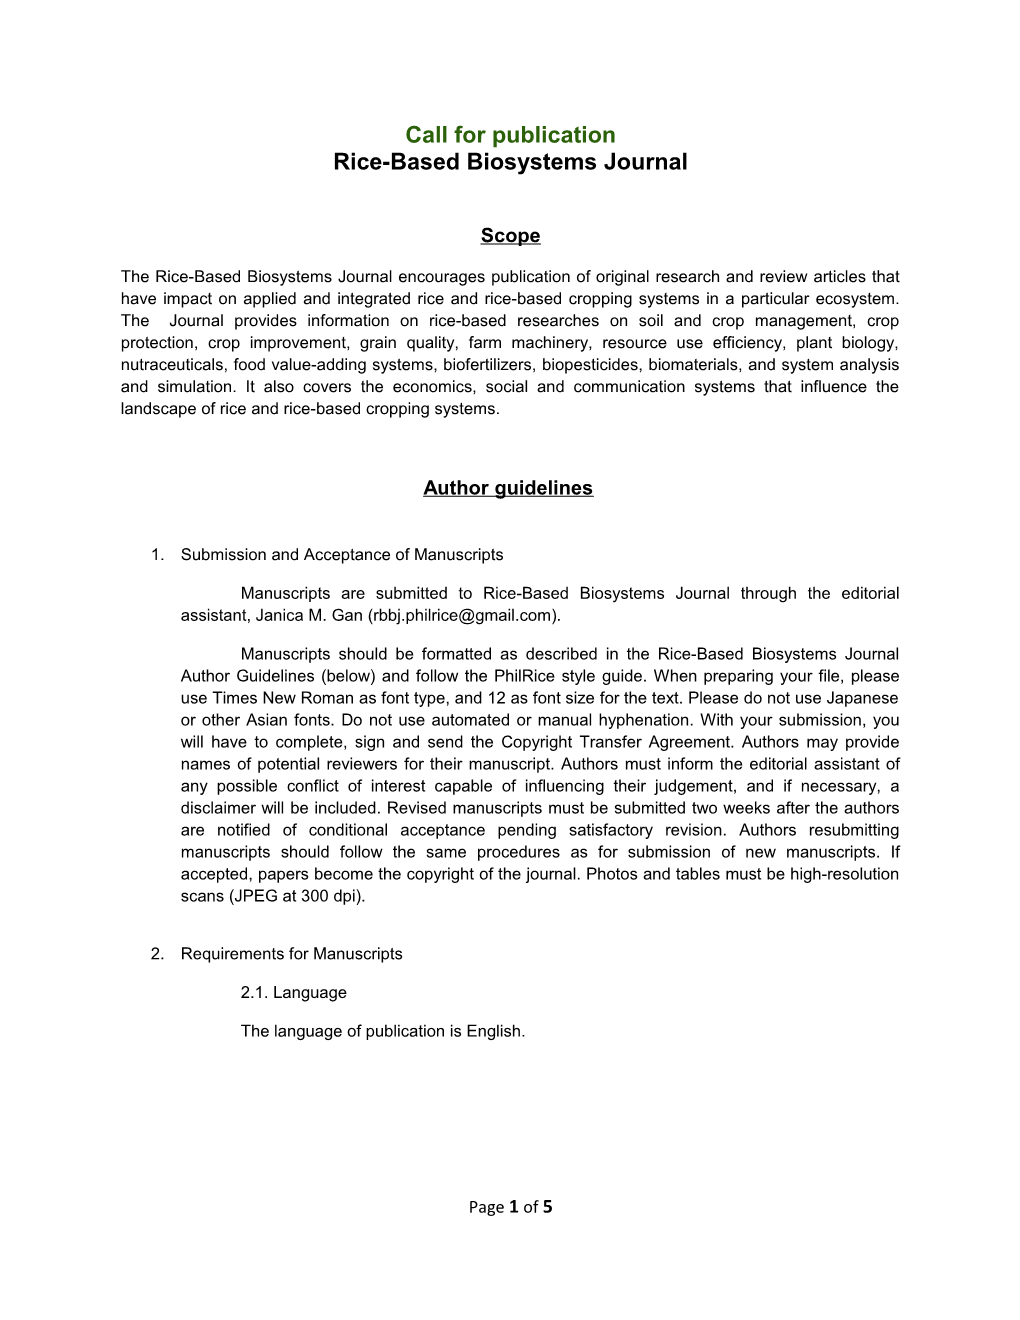 Rice-Based Biosystems Journal